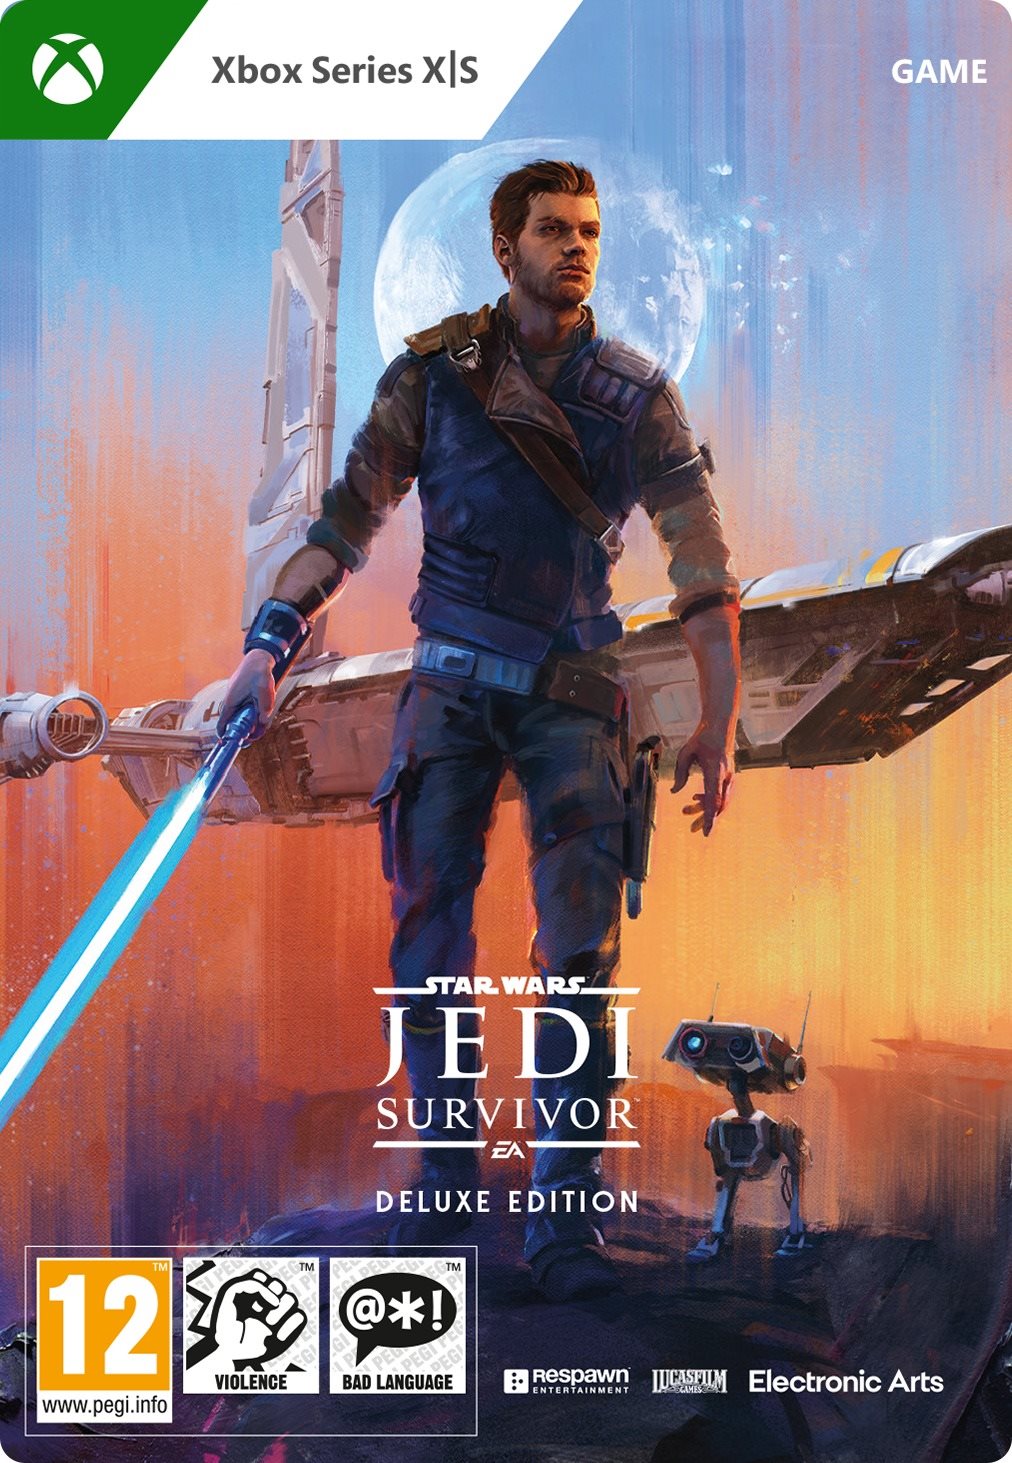 Star Wars Jedi: Survivor - Deluxe Edition - Xbox Series X|S Digital